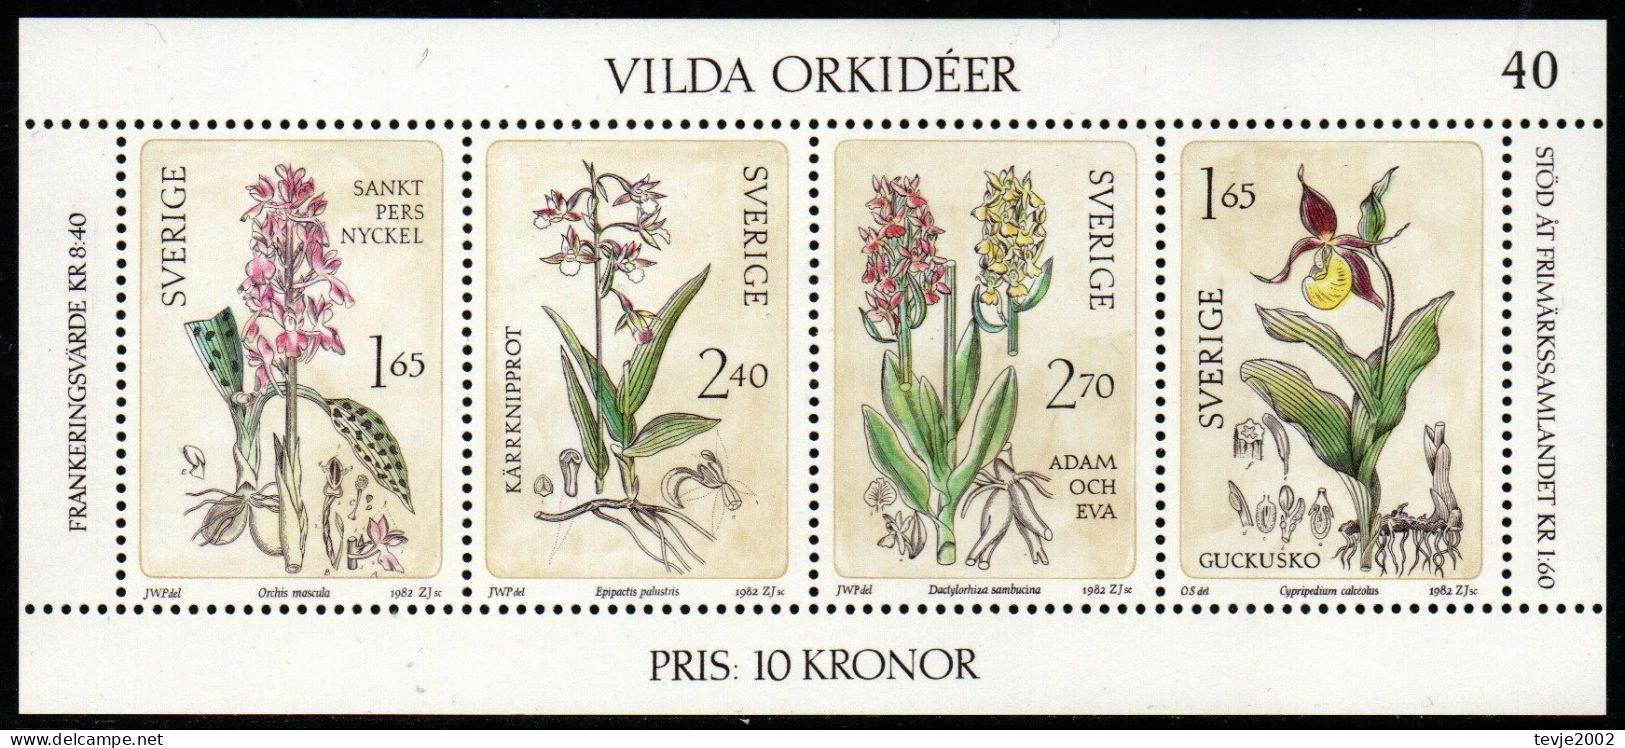 Schweden Sverige 1982 - Mi.Nr. Block 10 - Postfrisch MNH - Blumen Flowers Orchideen Orchids - Orchidee